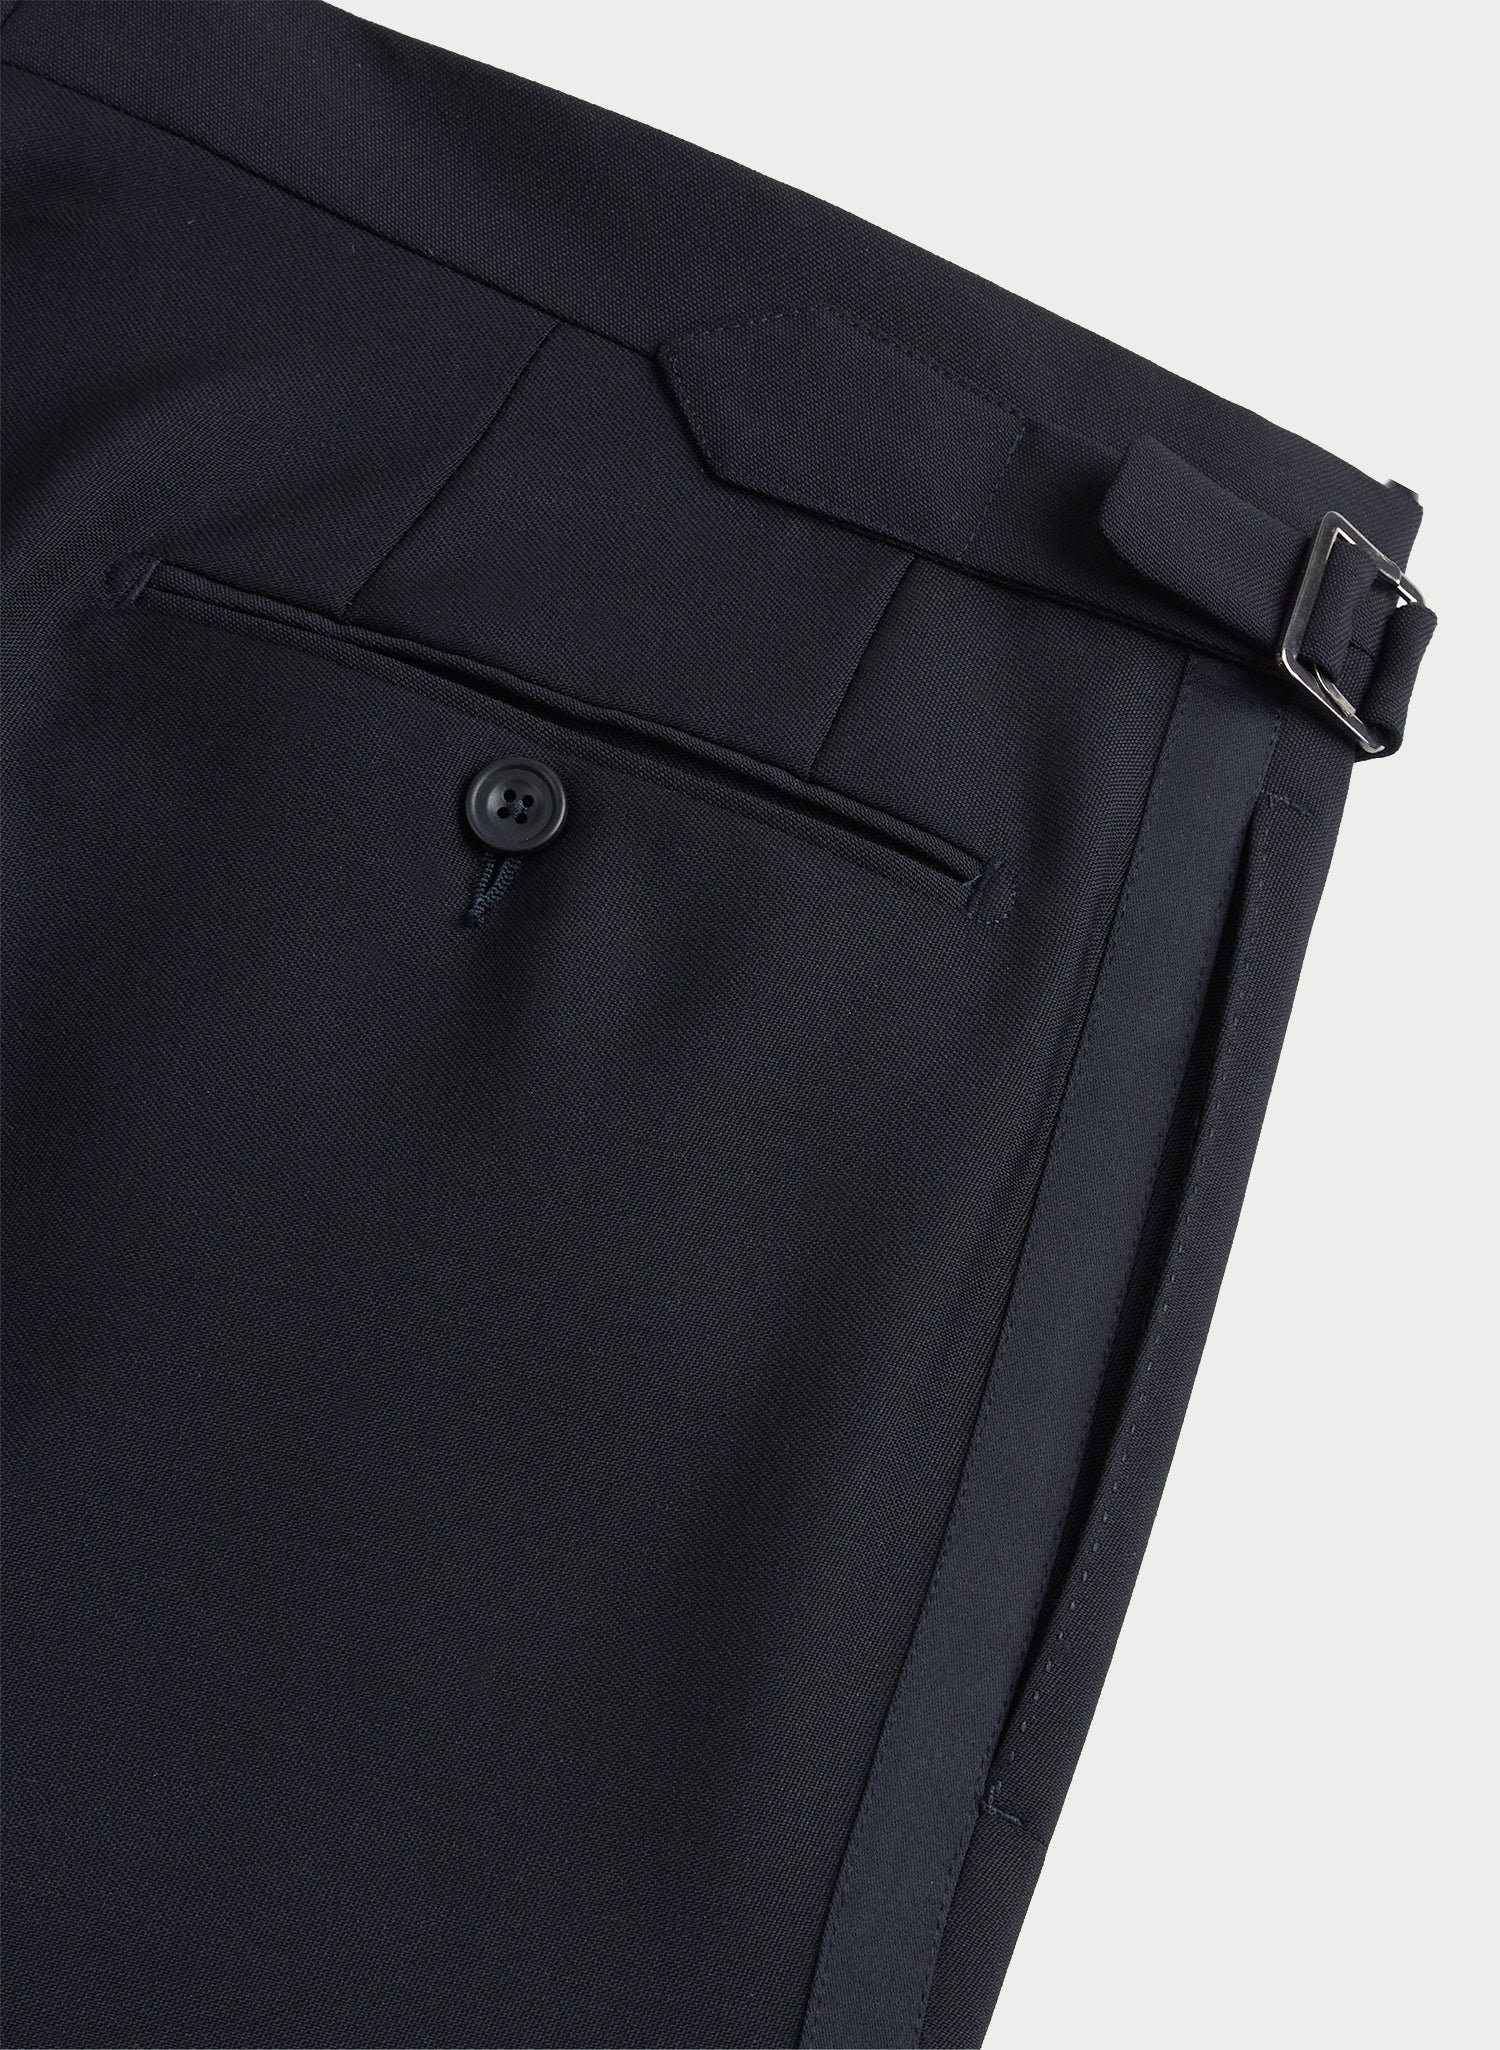 Shawl Lapel Dinner Suit Midnight Navy Trouser Pocket